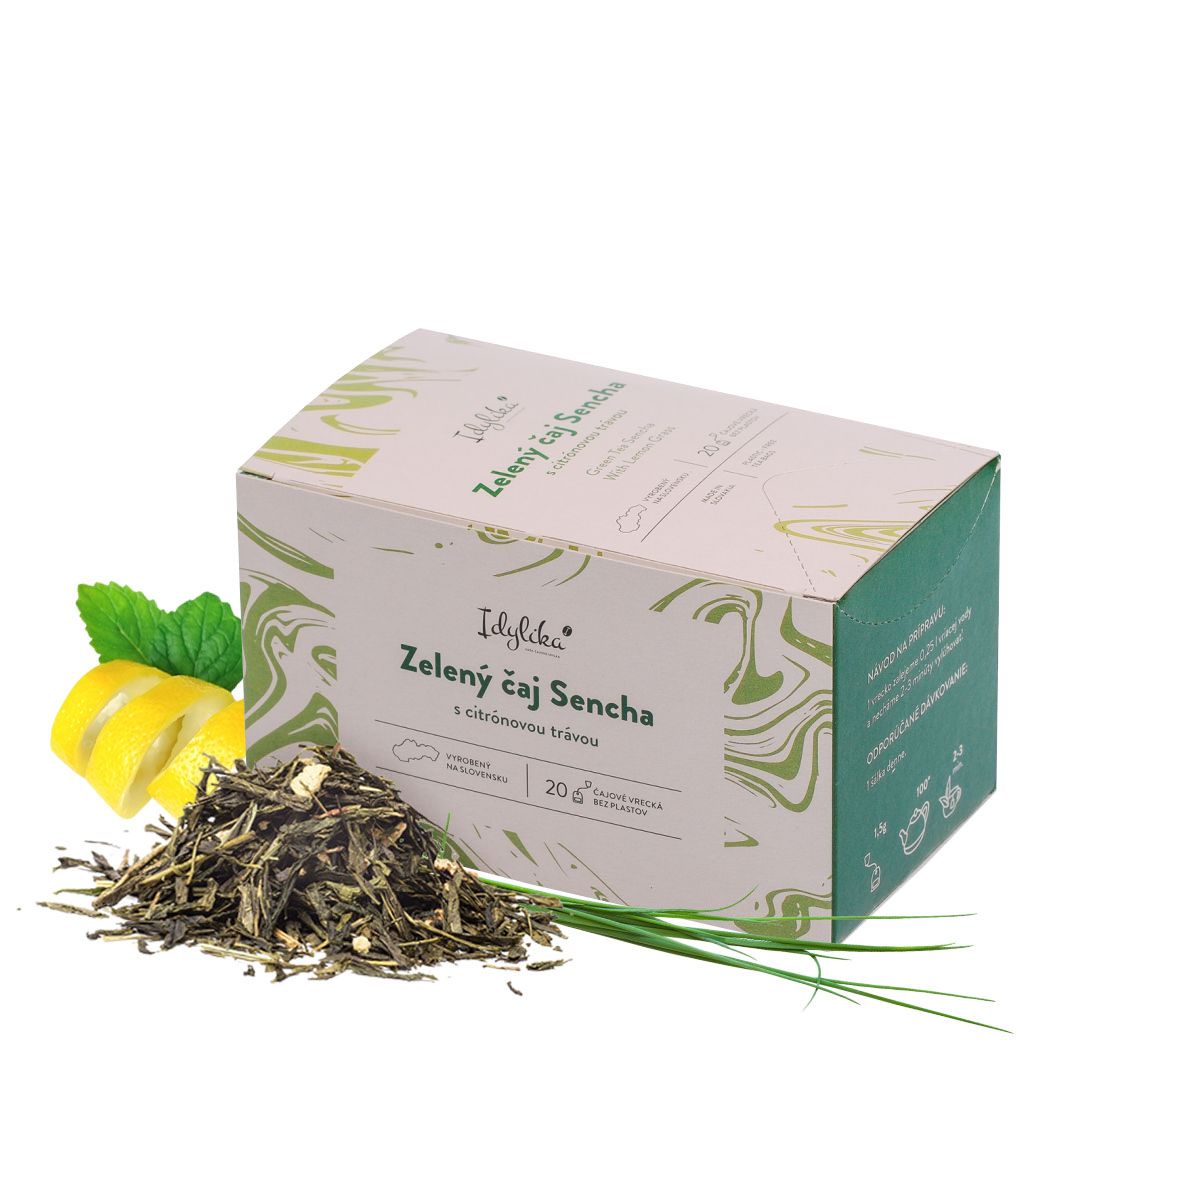 Zelený čaj Sencha s citrónovou trávou